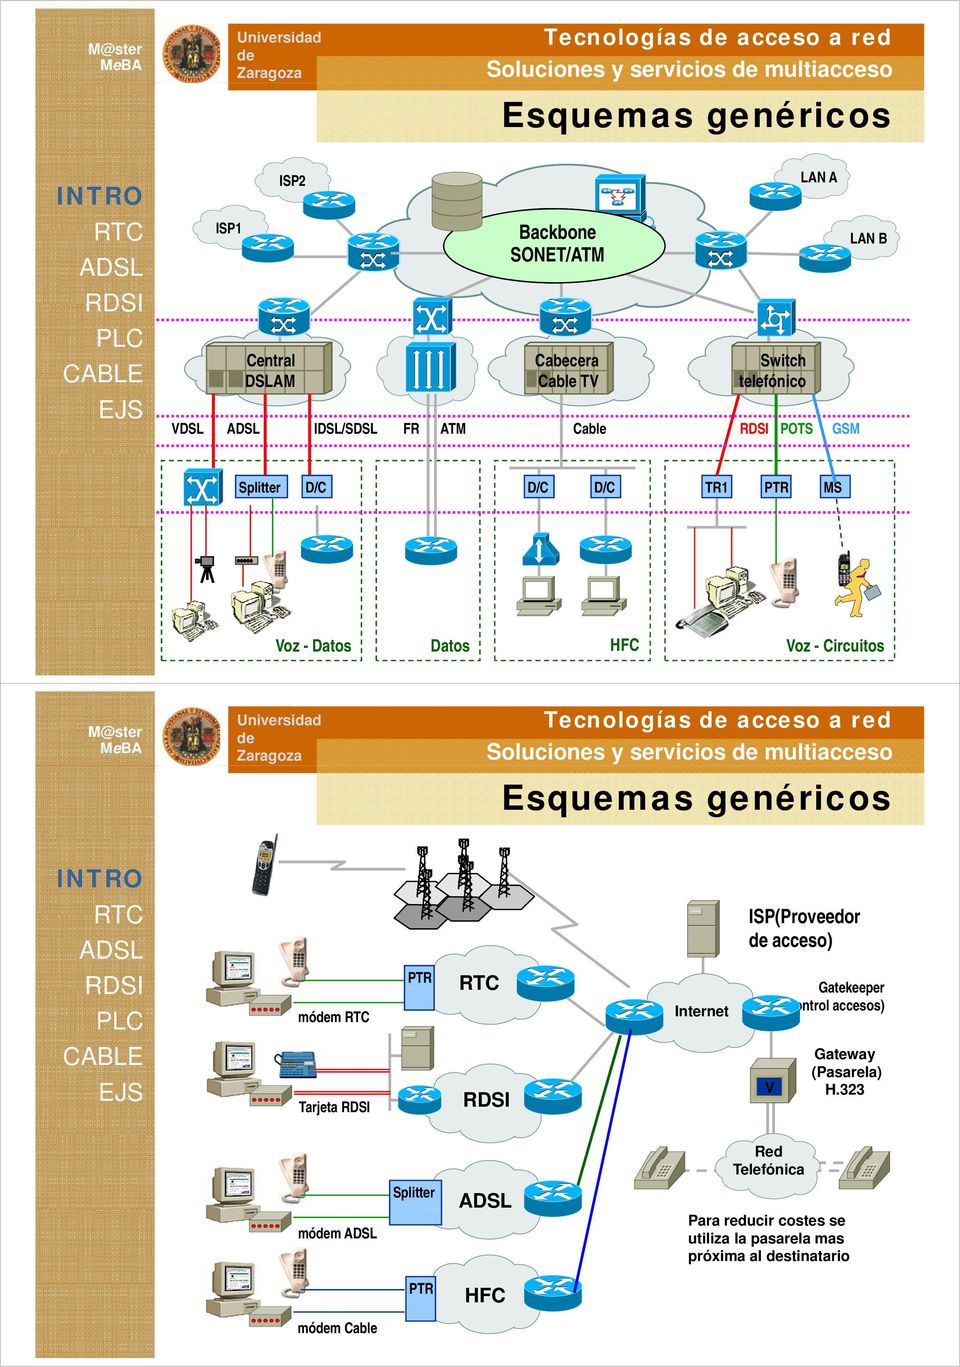 Tecnologías acceso a red Esquemas genéricos móm Tarjeta PTR Internet ISP(Proveedor acceso) V Gatekeeper (control accesos)